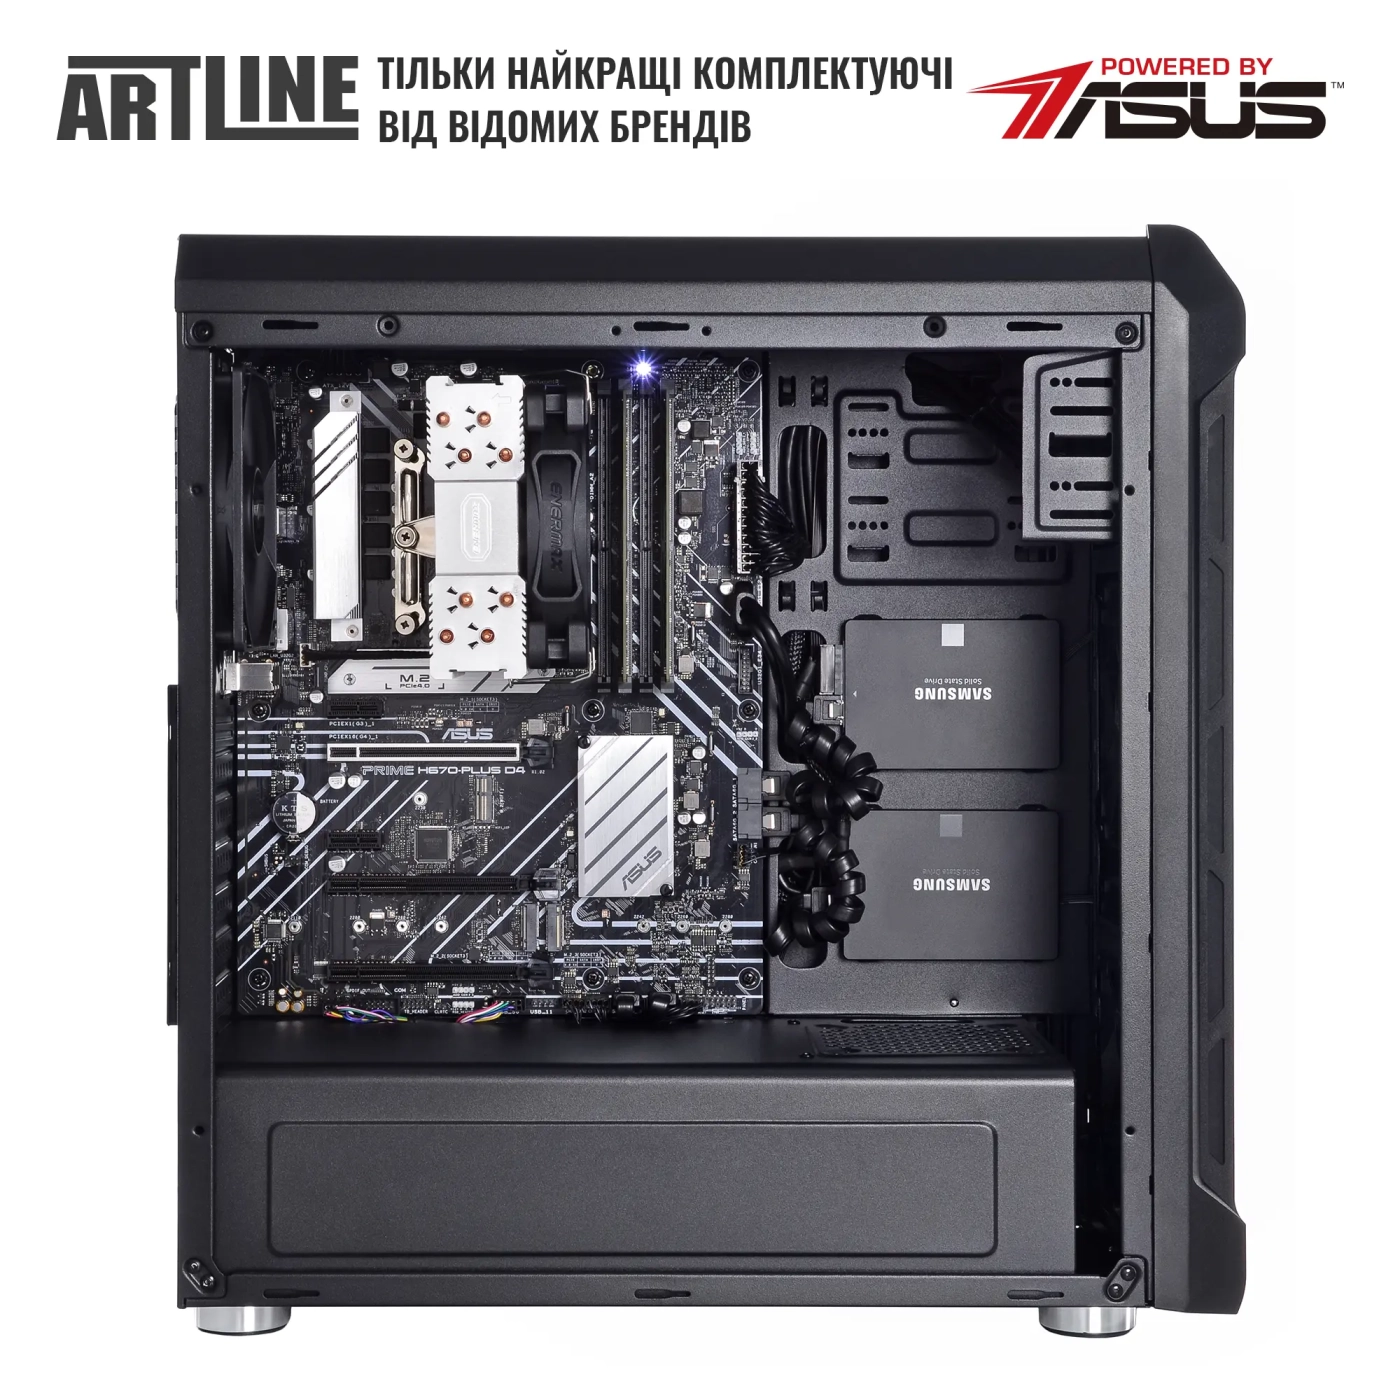 Купити Сервер ARTLINE Business T27 (T27v38) - фото 4